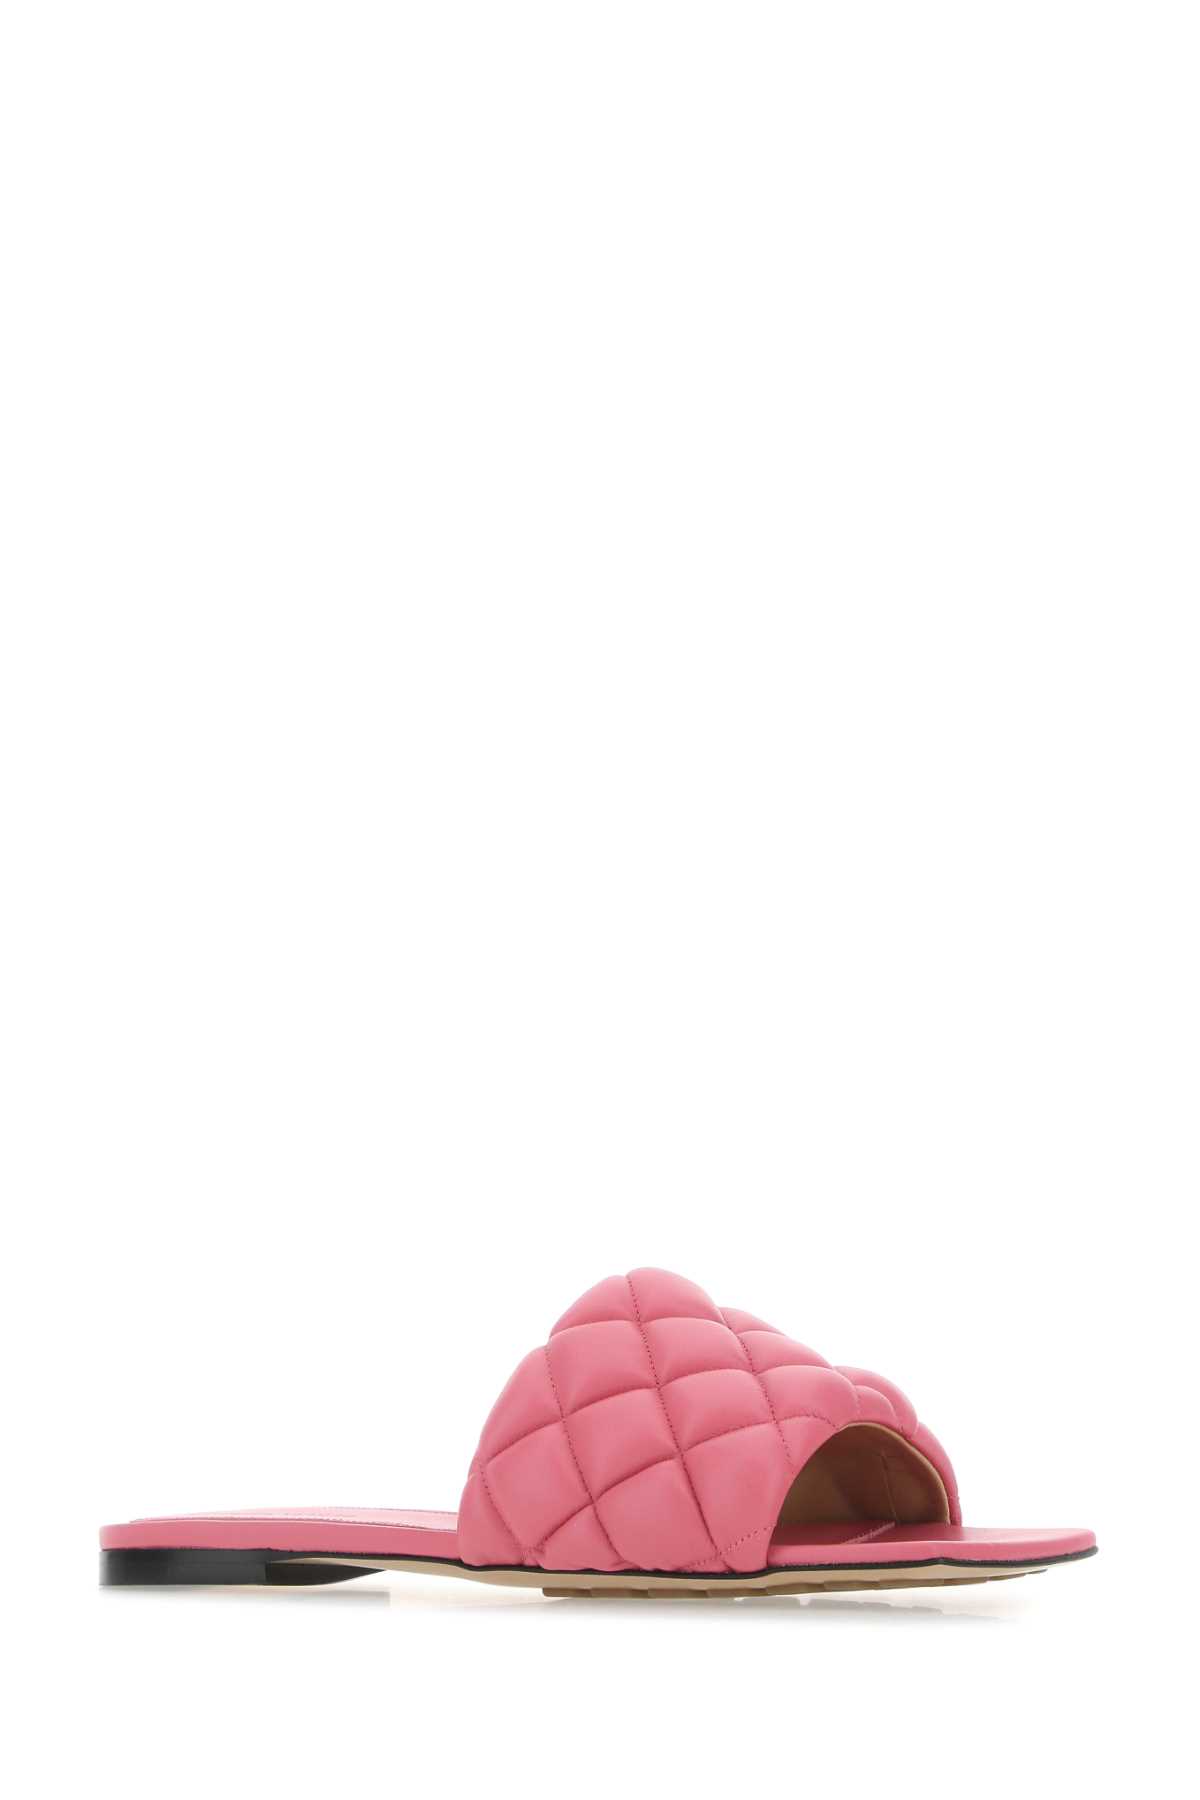 Bottega Veneta Pink Nappa Leather Padded Slippers In 5963